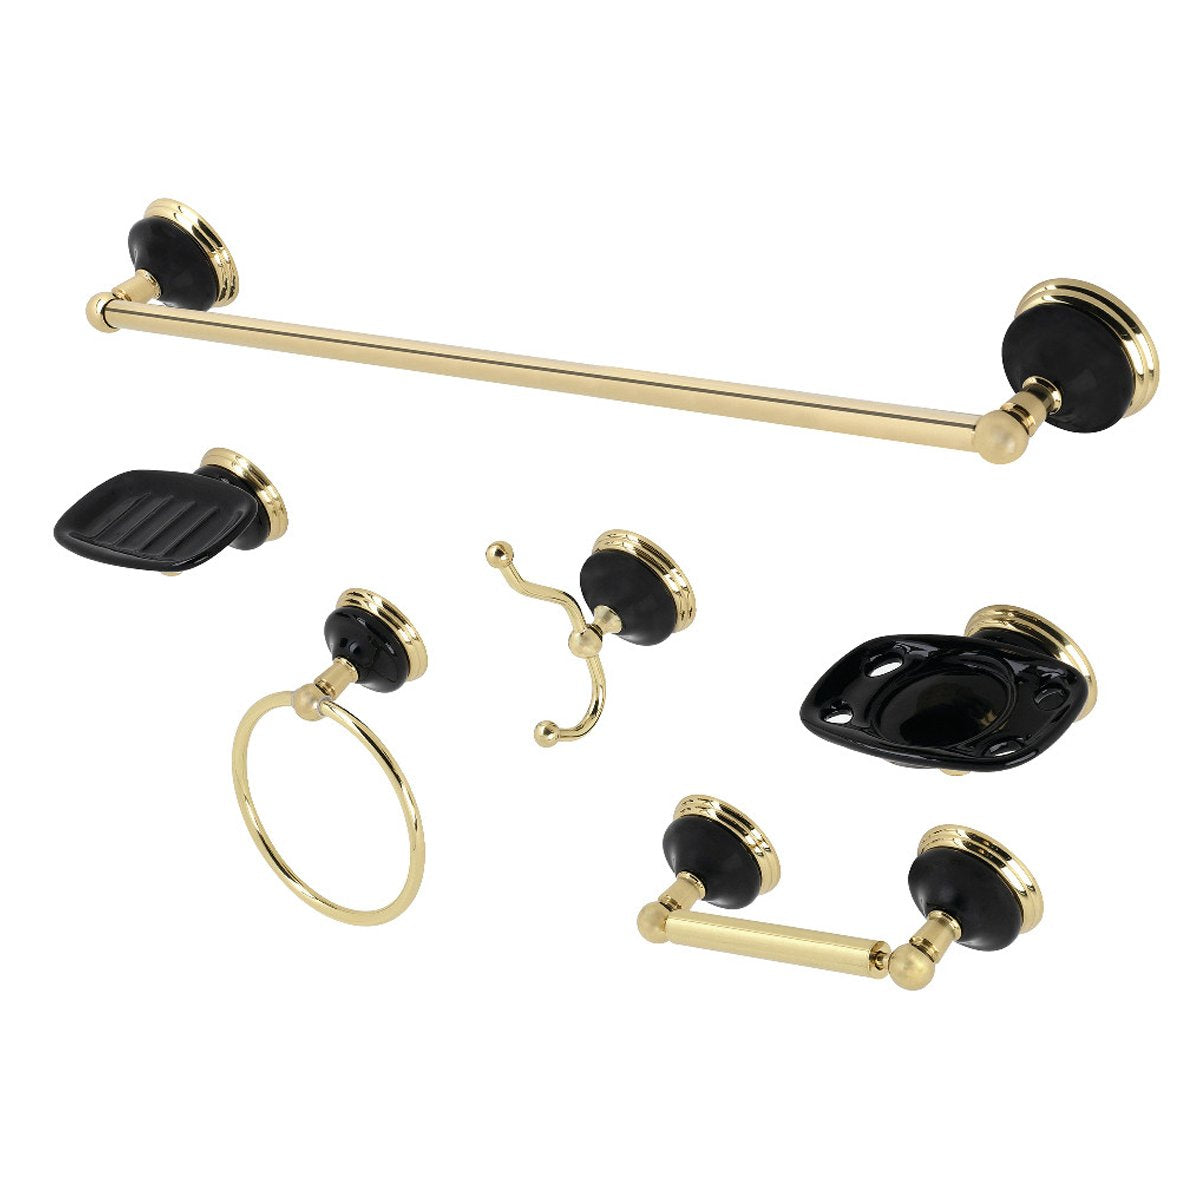 Kingston Brass Water Onyx 6-Piece Bathroom Accessory Set